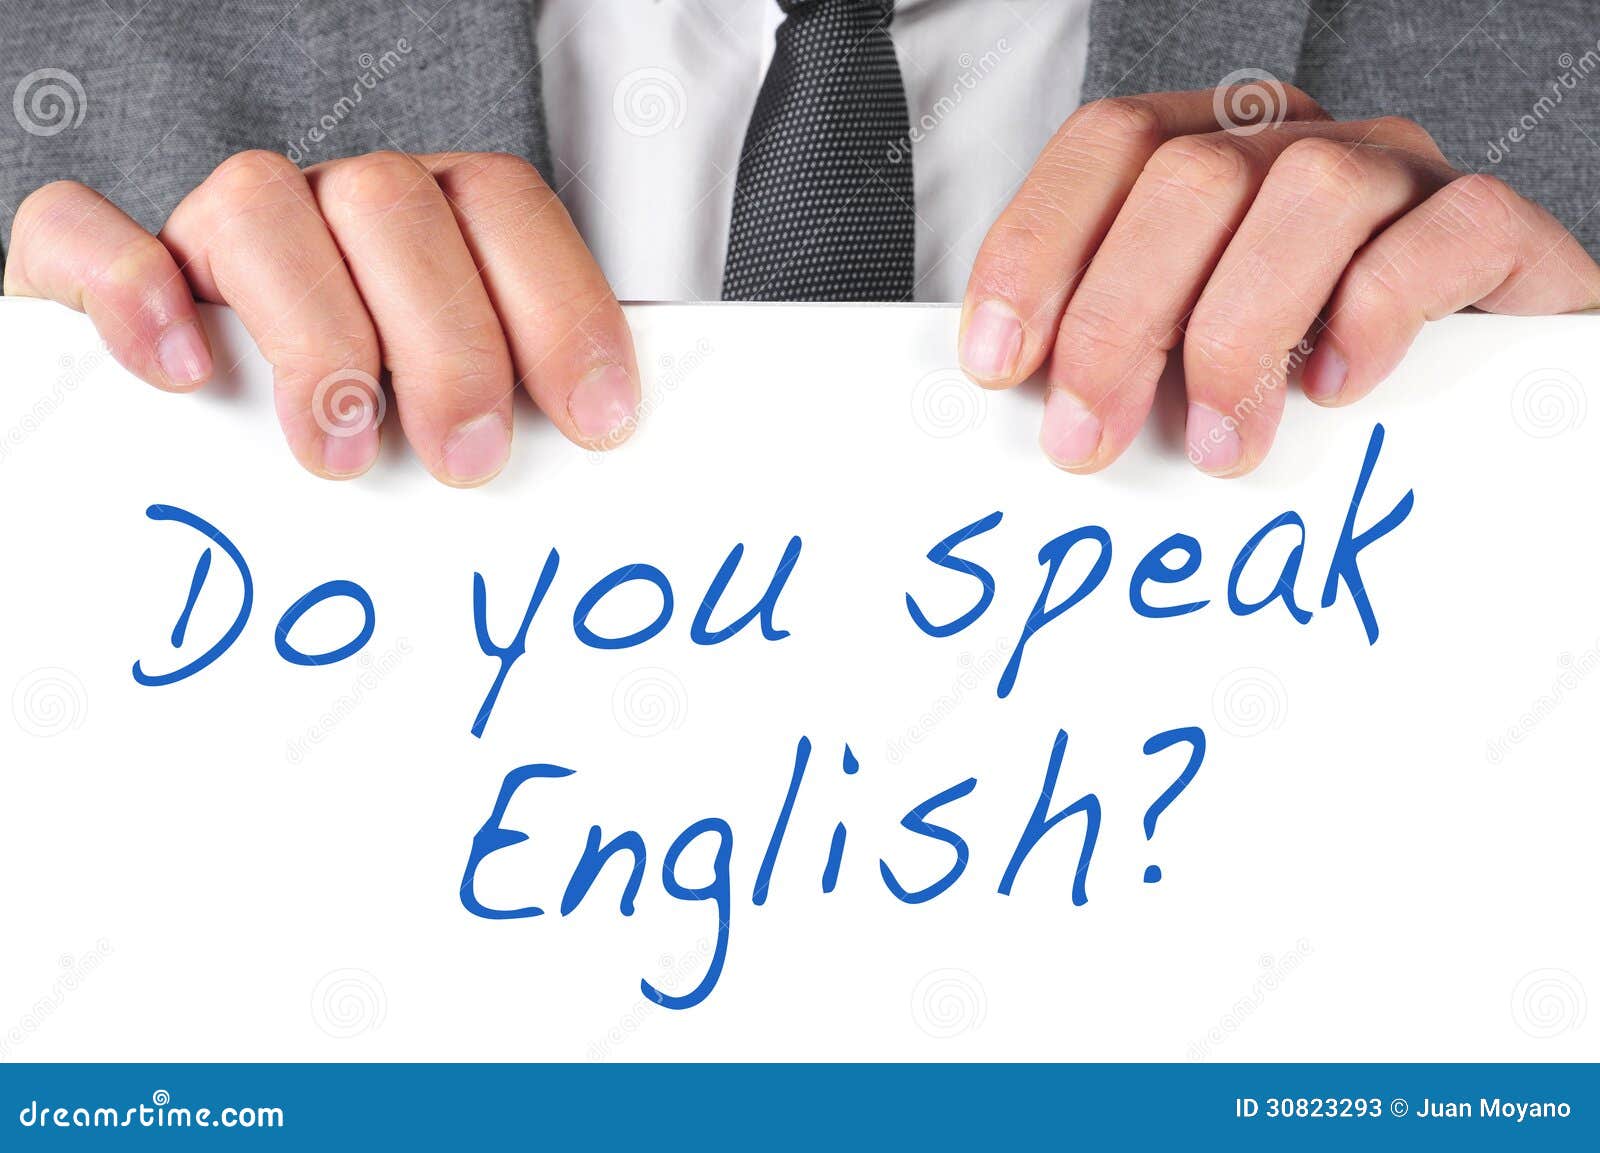 Do you speak english well. Английский язык do you speak. Do you speak English картинки. Do you speak English без фона. Говорить на английском.